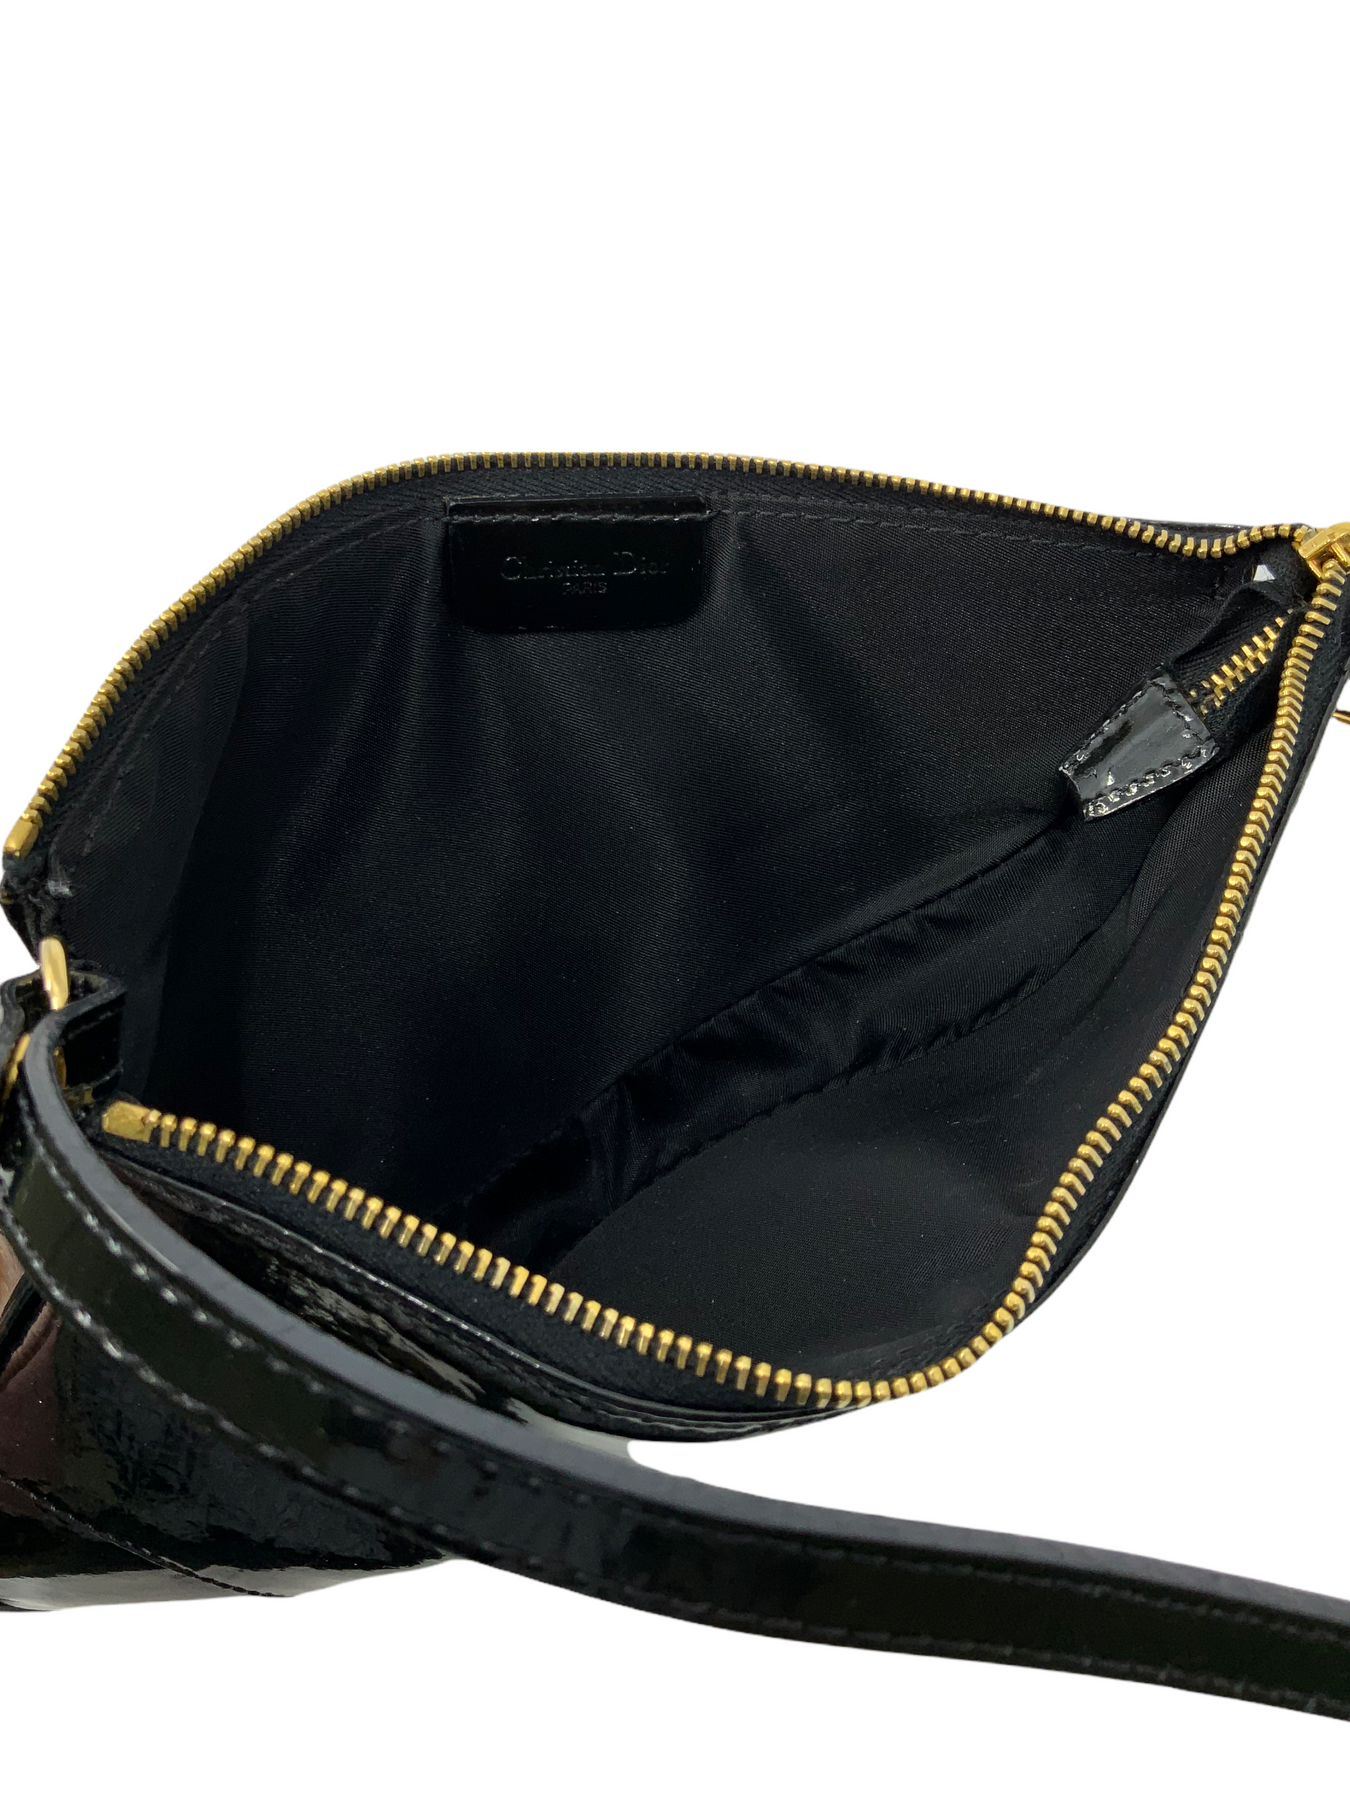 Dress Coat and Dior Saddle Medium Bag #diorss19 #diorsaddlebag